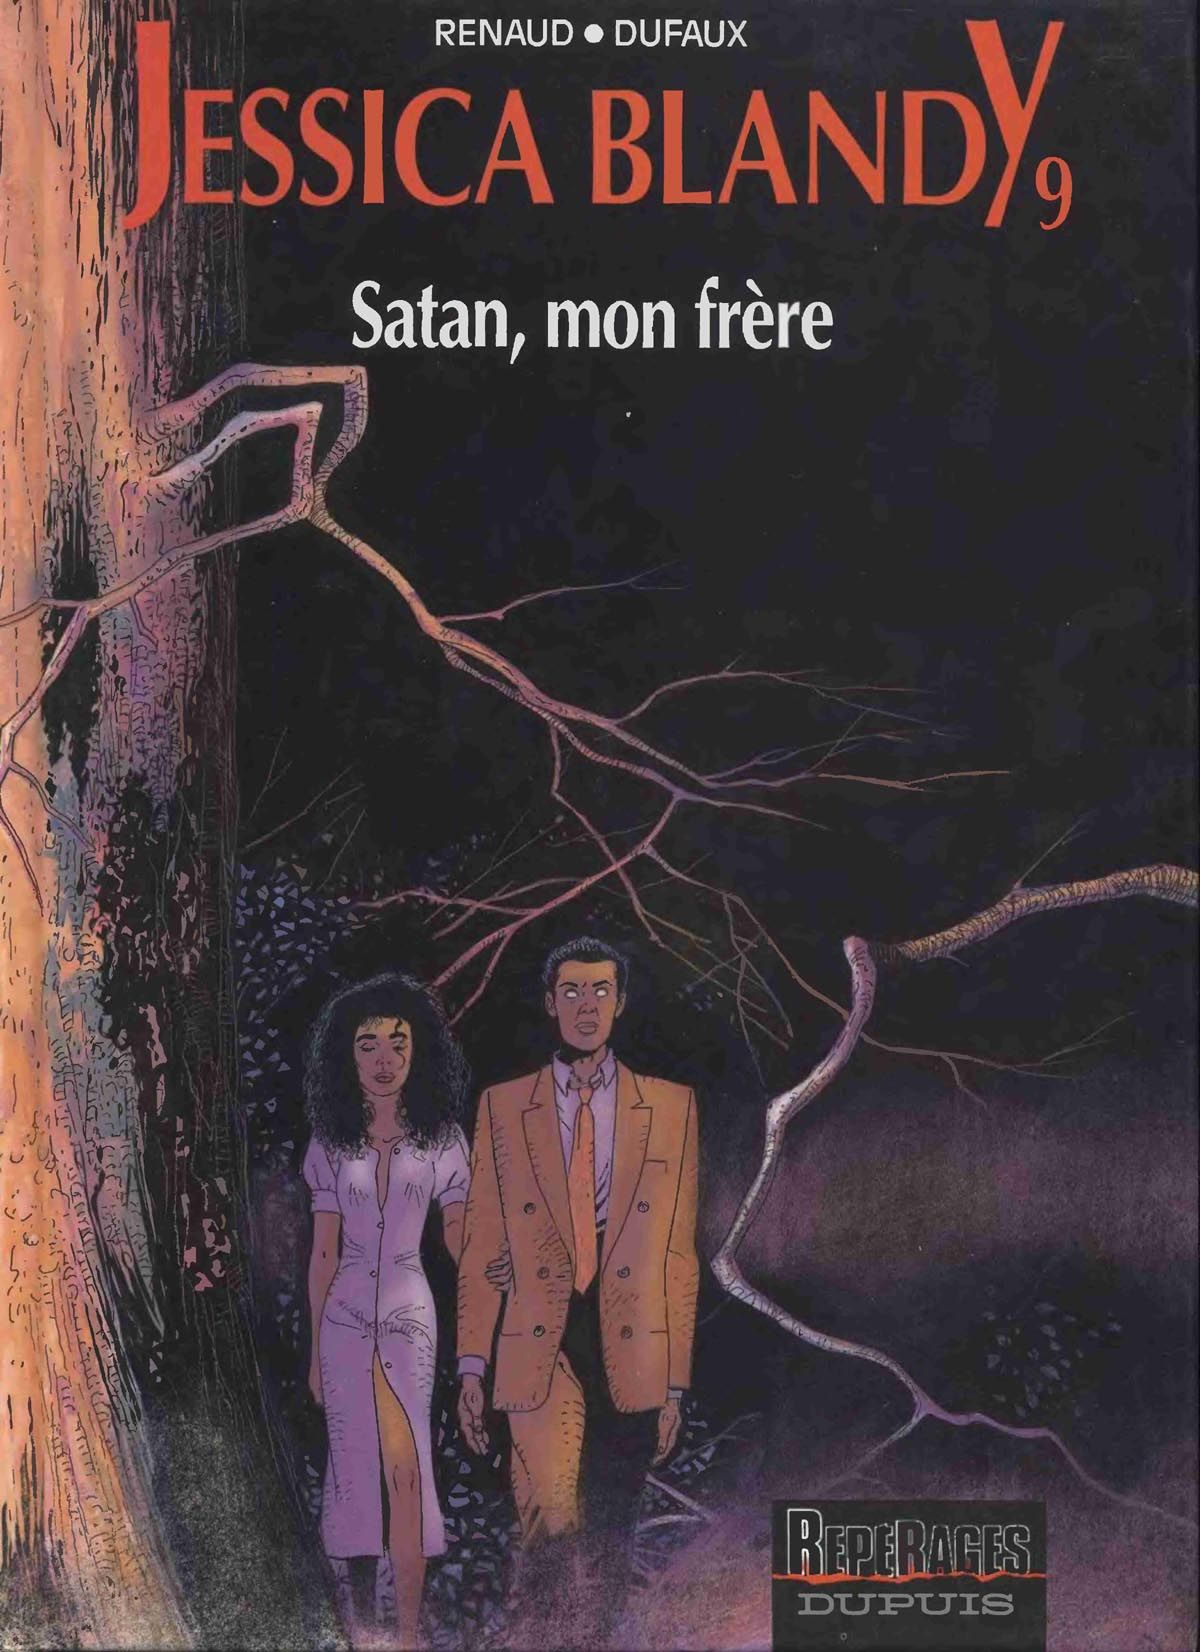 [Renaud, Dufaux] Jessica Blandy - 09 - Satan mon frere [French] 1